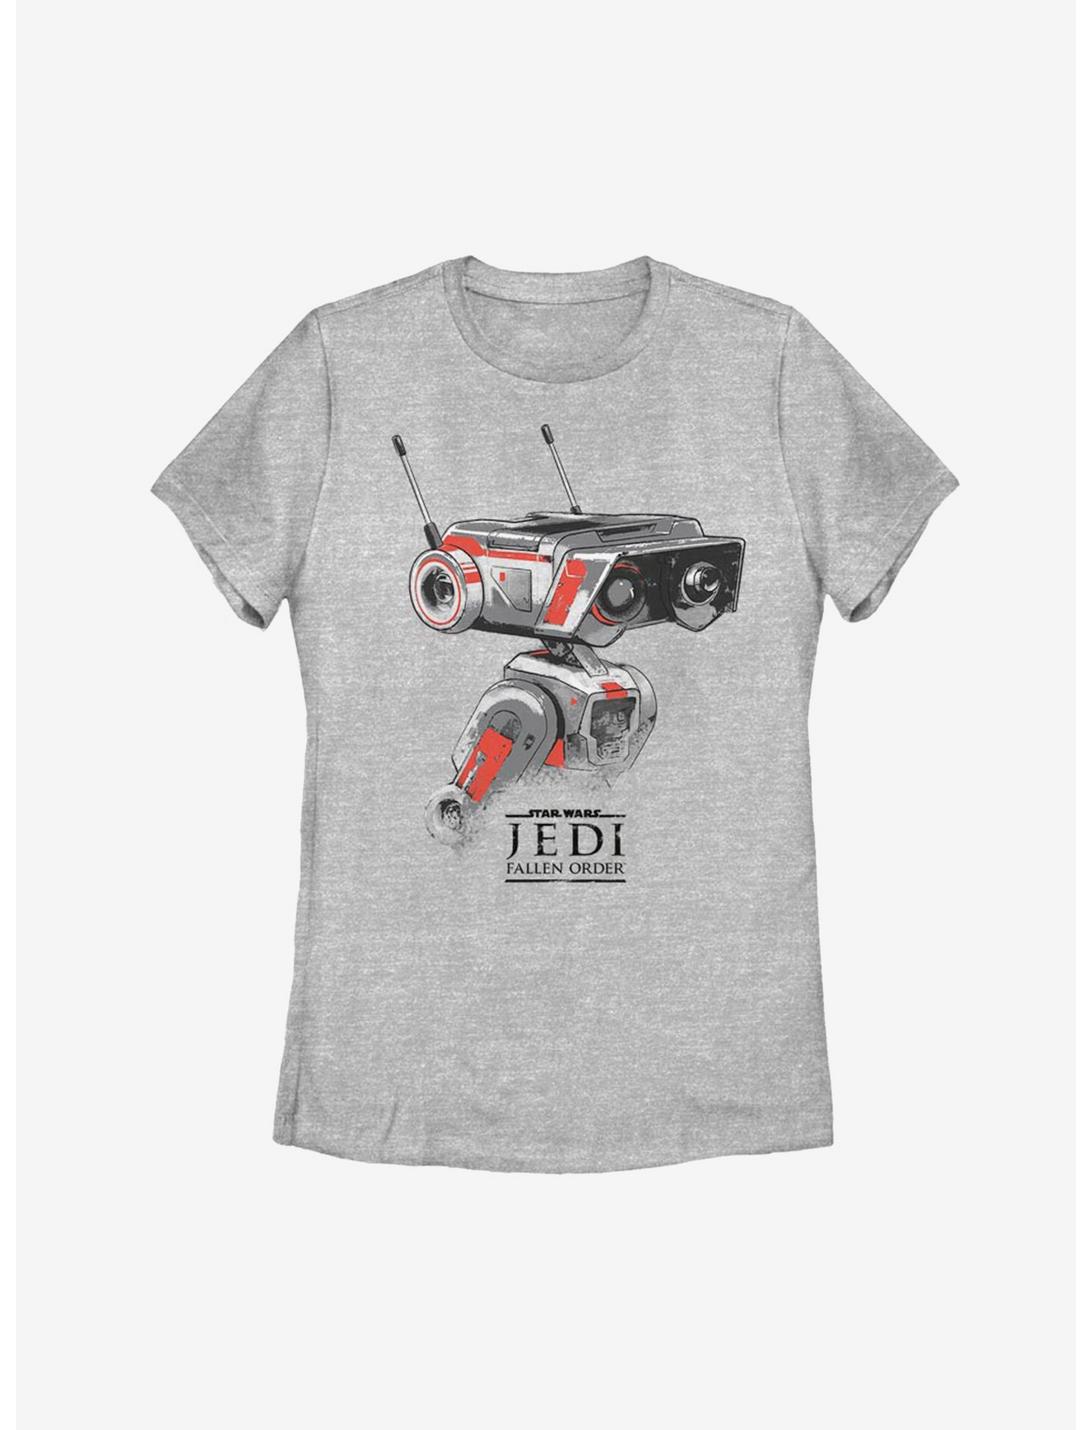 Star Wars Jedi Fallen Order BD-1 Sketch Womens T-Shirt, ATH HTR, hi-res